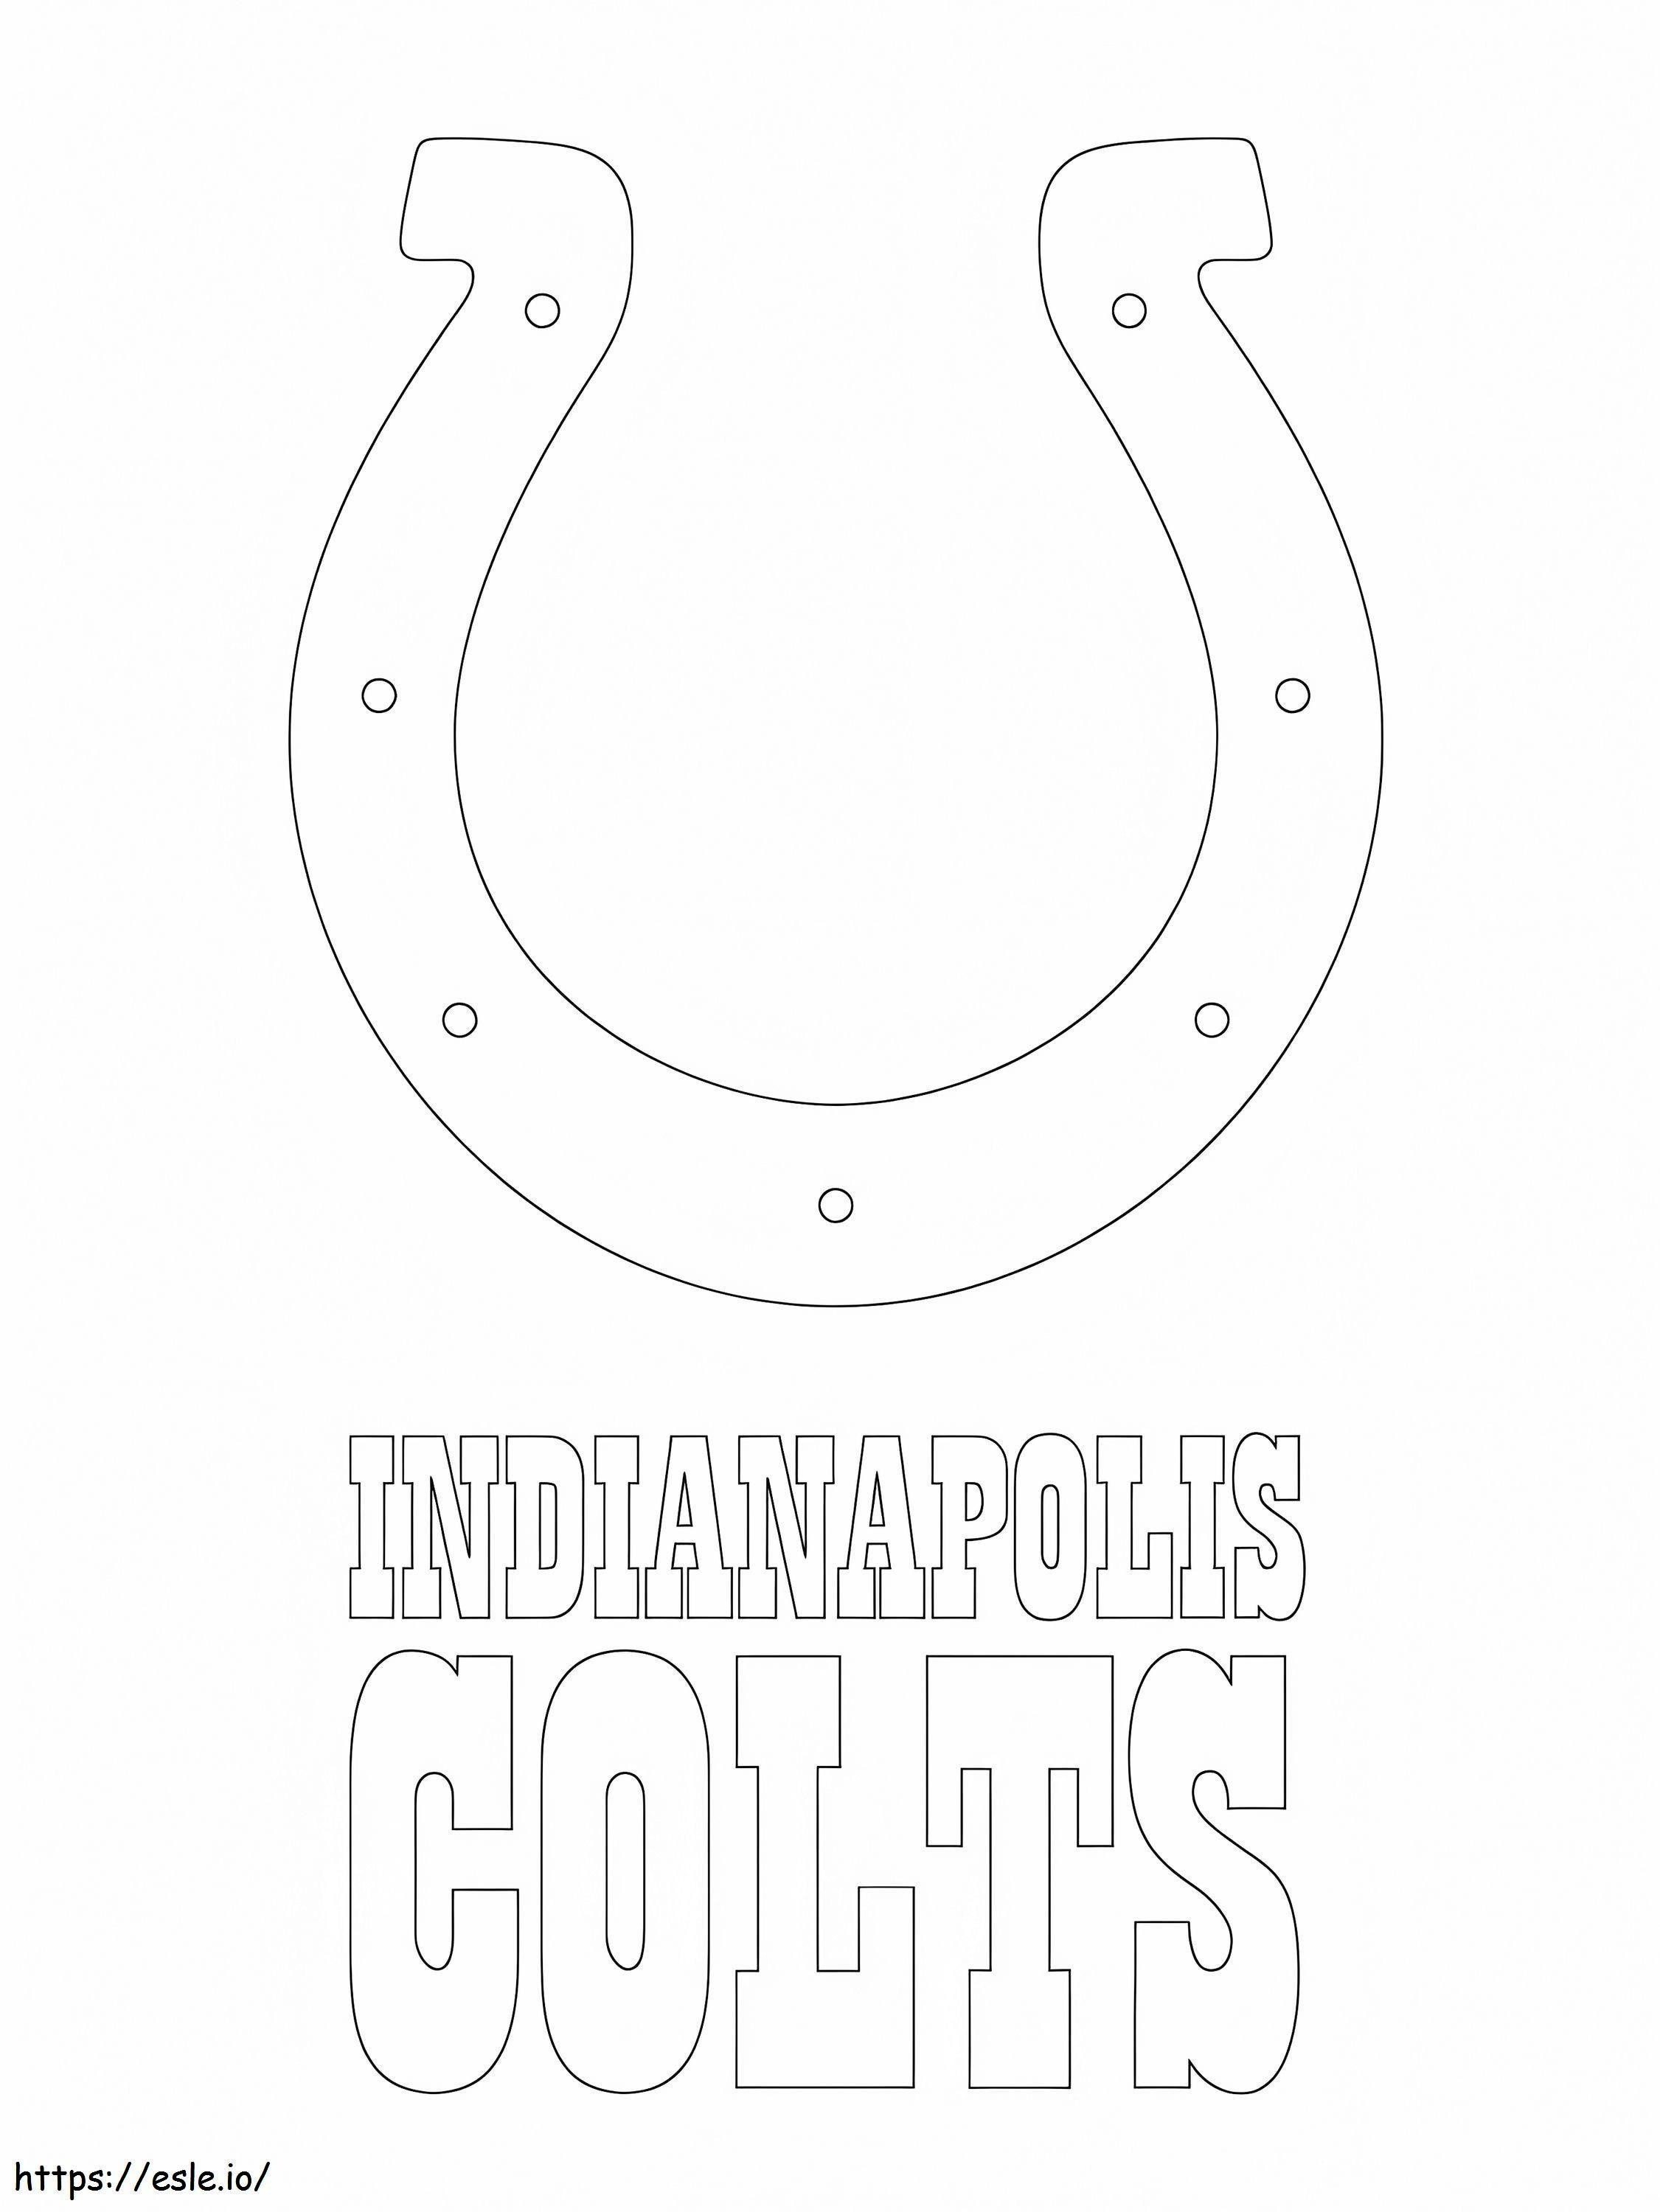 Indianapolis Colts logosu boyama